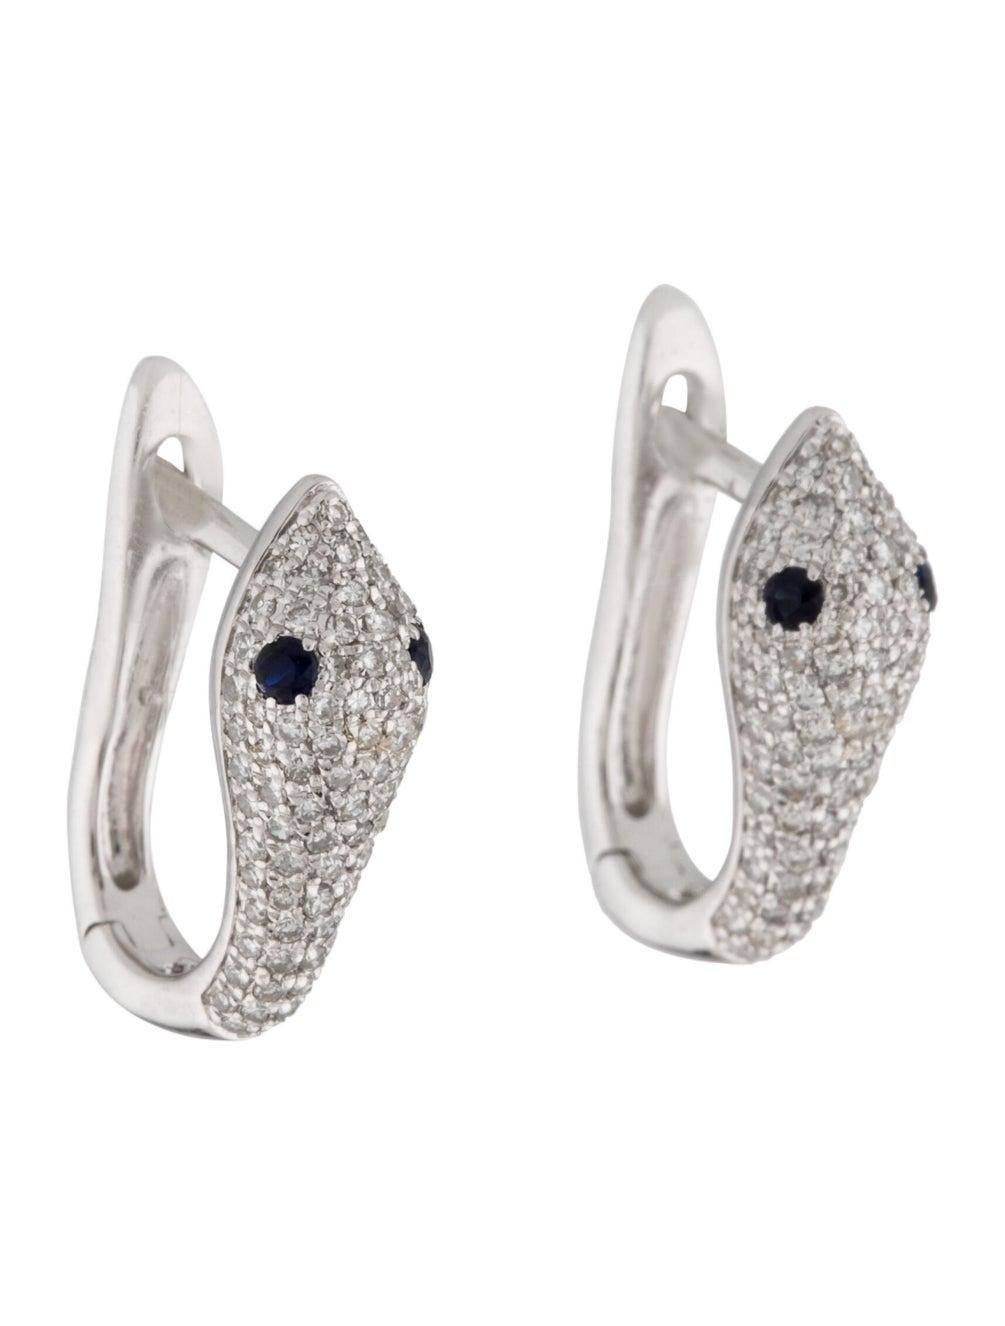 Round Cut 14K White Gold 0.42 Carat Diamond & Sapphire Snake Earrings